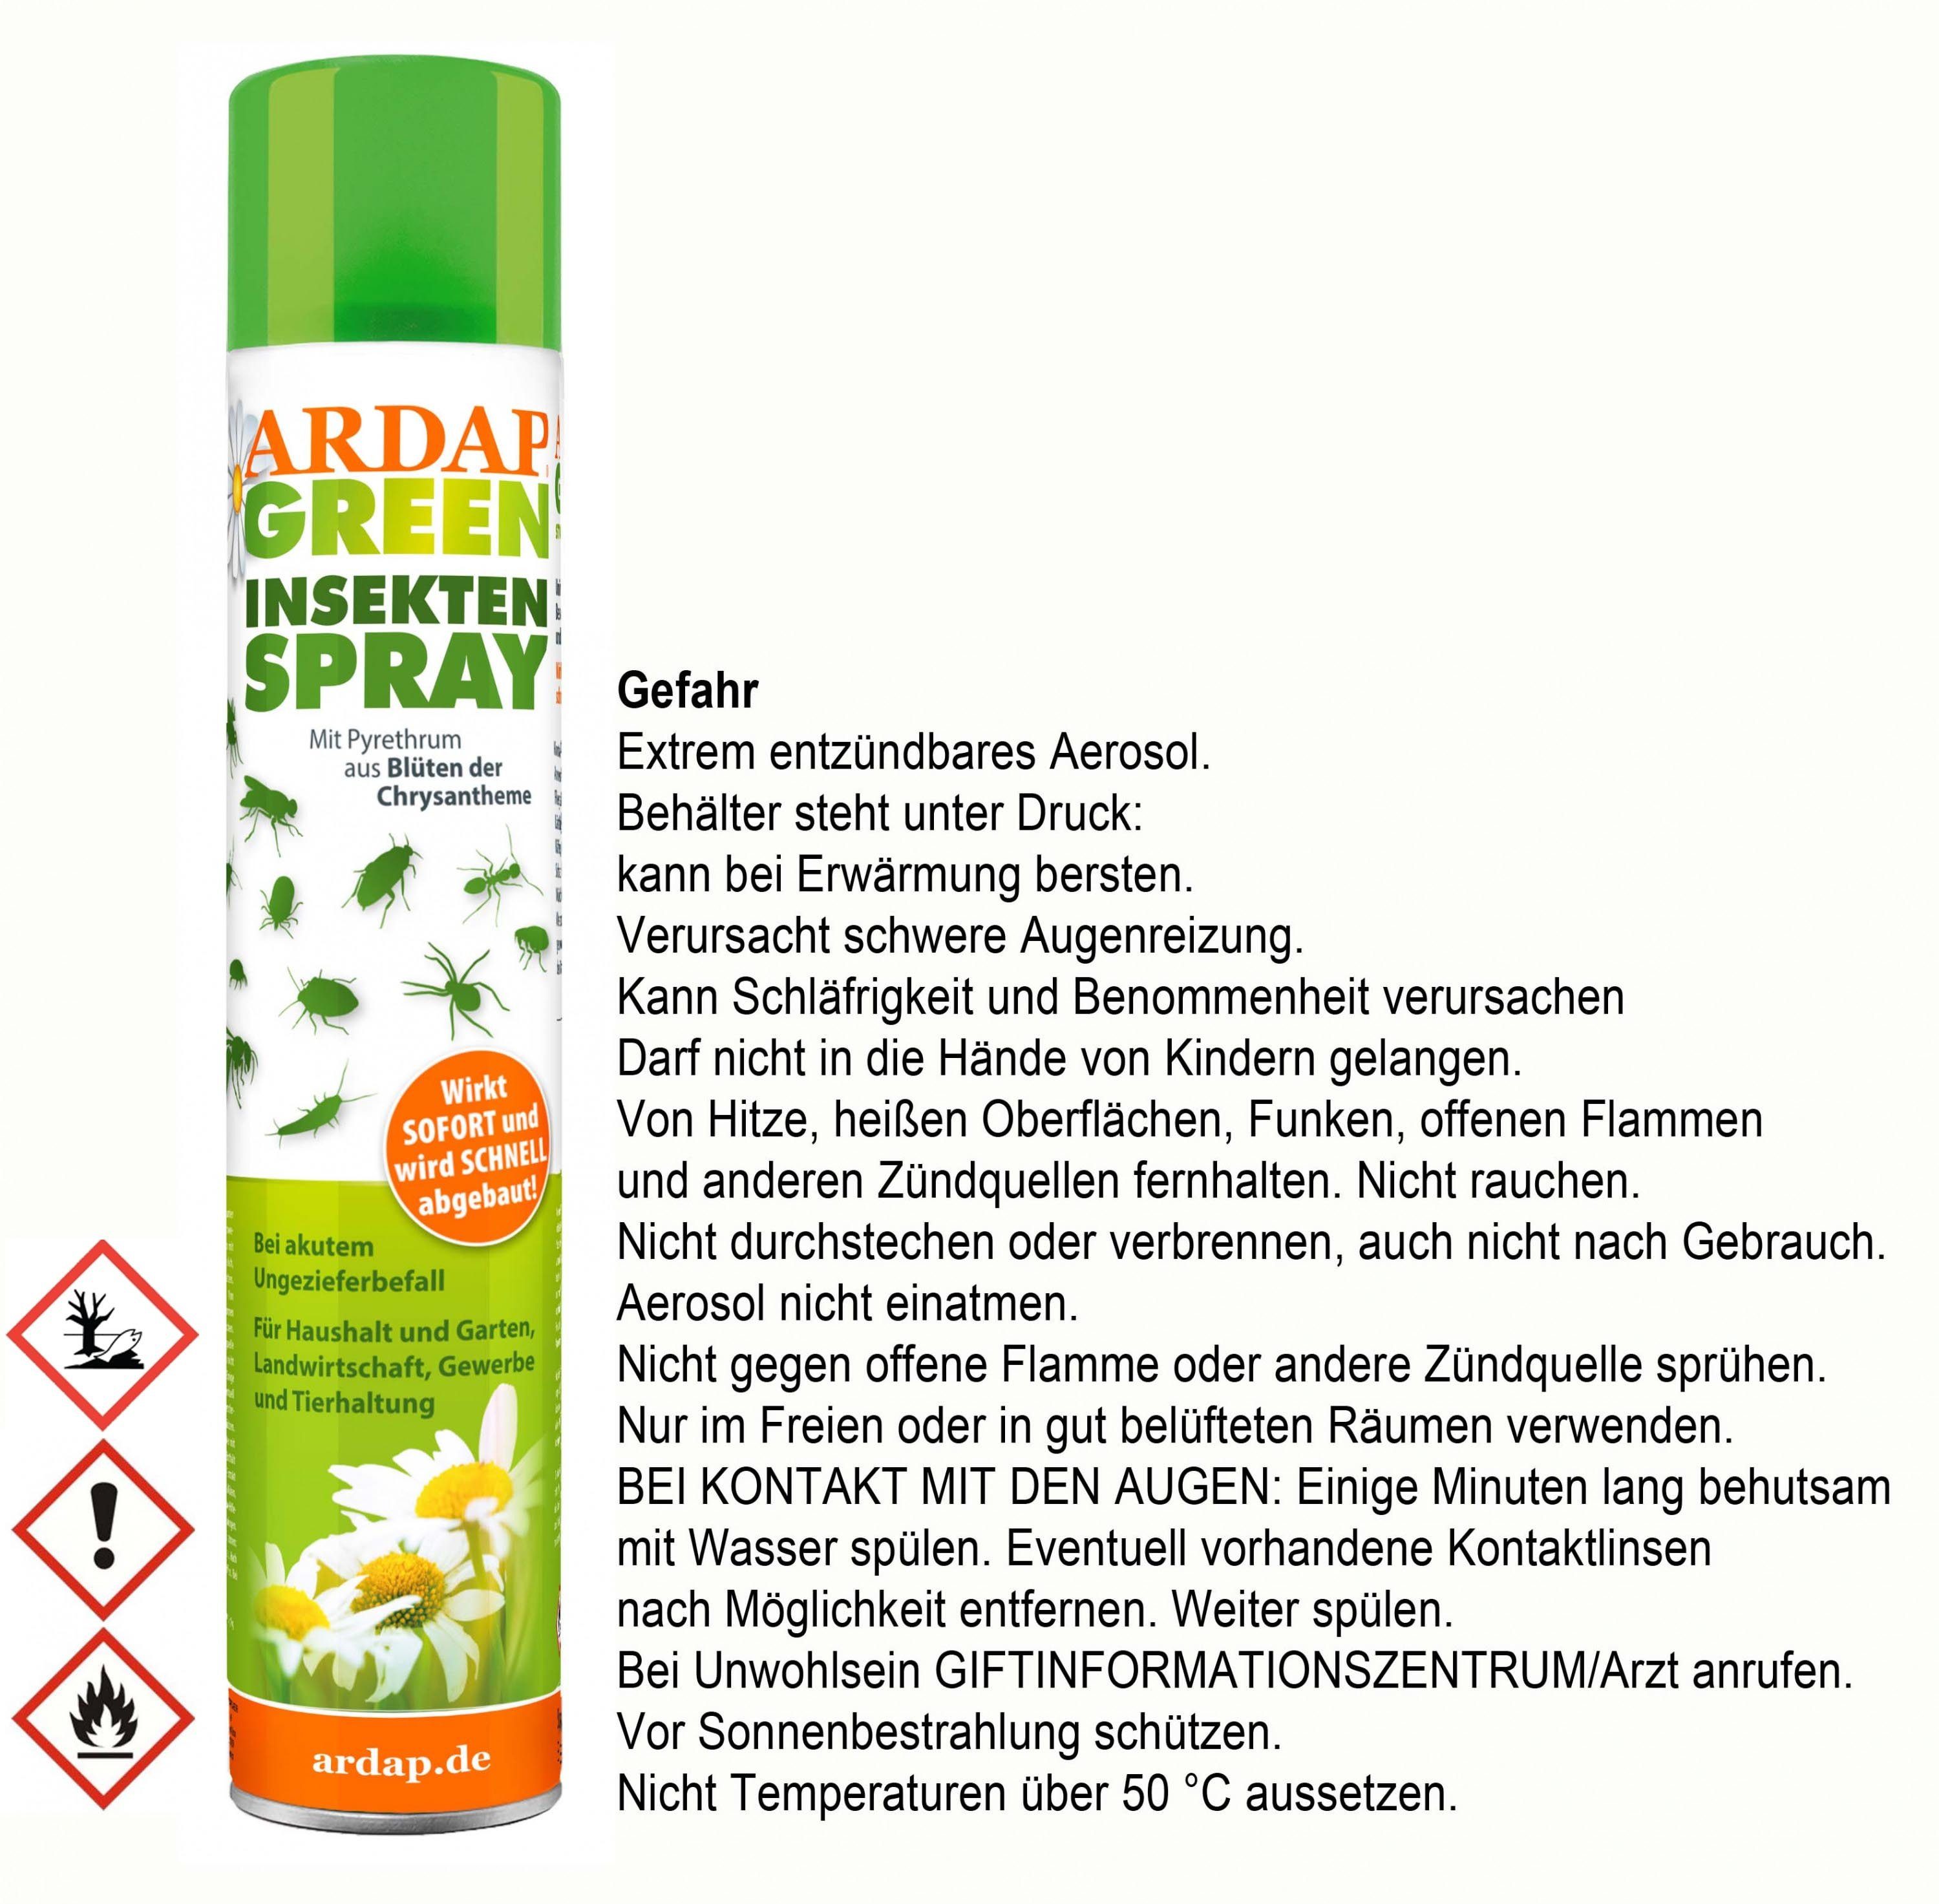 Ardap Insektenspray Ardap Green Insekten Spray +++ 750 ml +++ | Insektizide